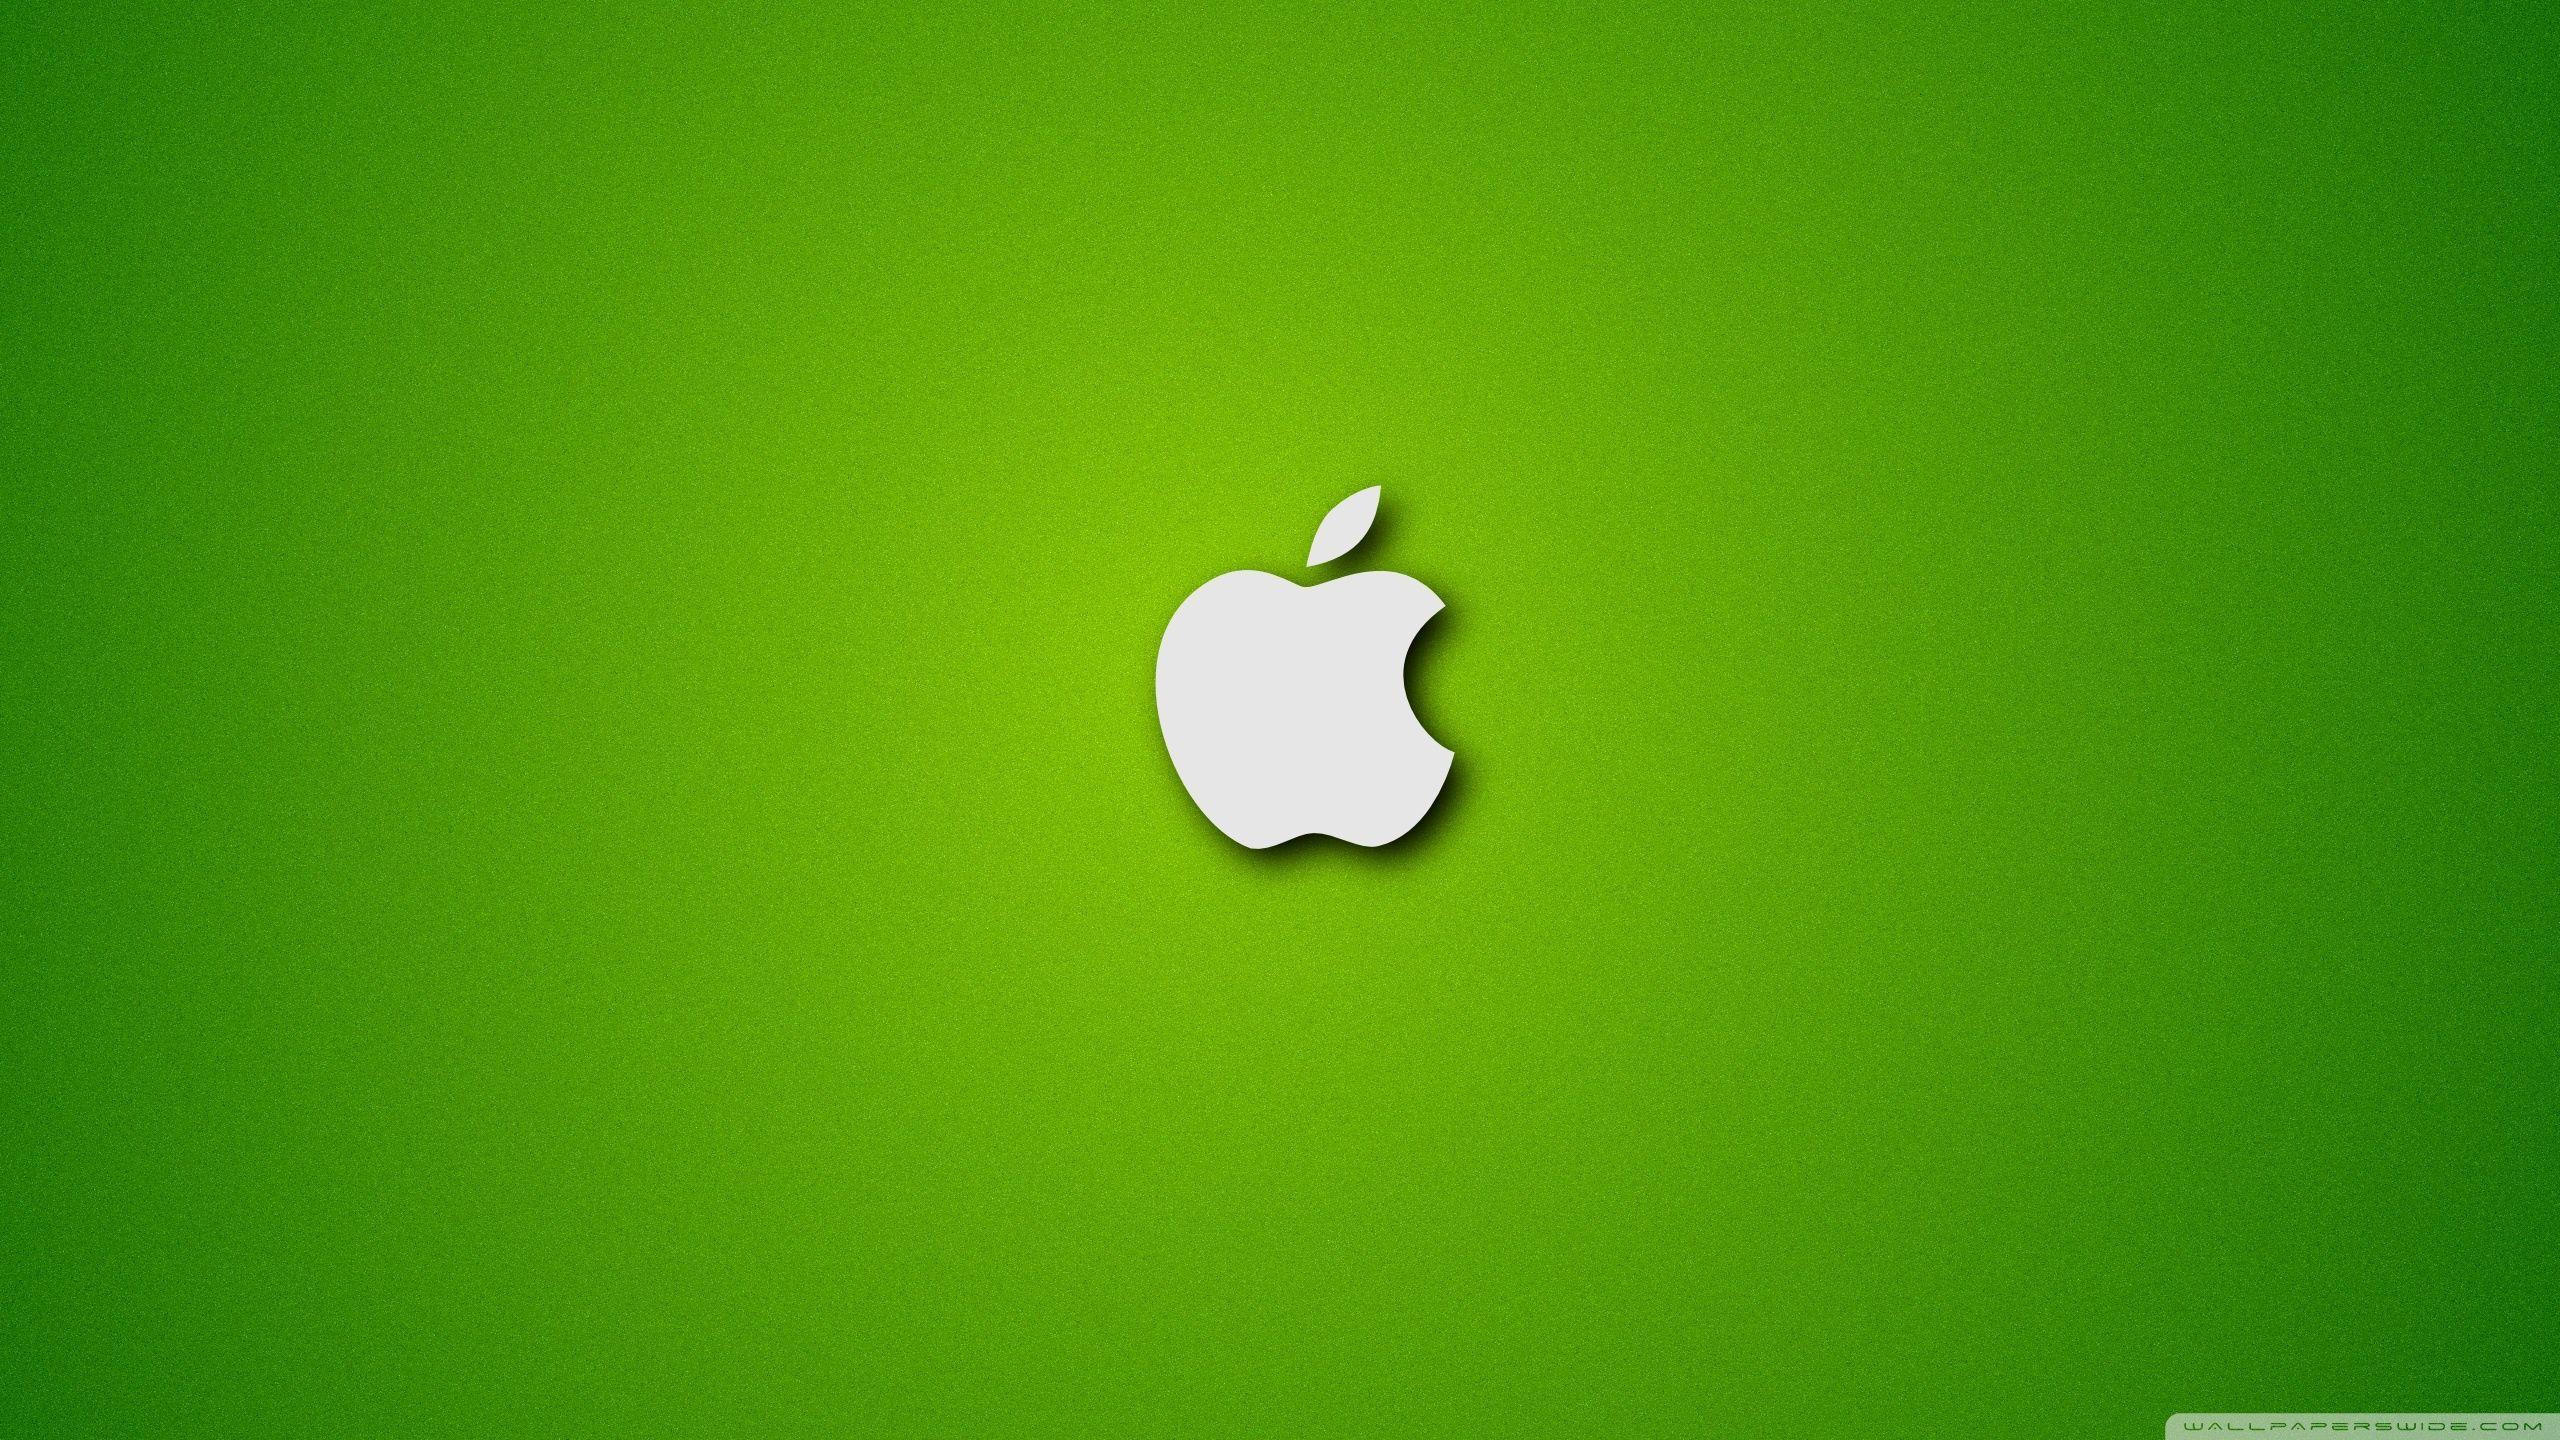 HD wallpaper Apple logo green mac green color green background  indoors  Wallpaper Flare